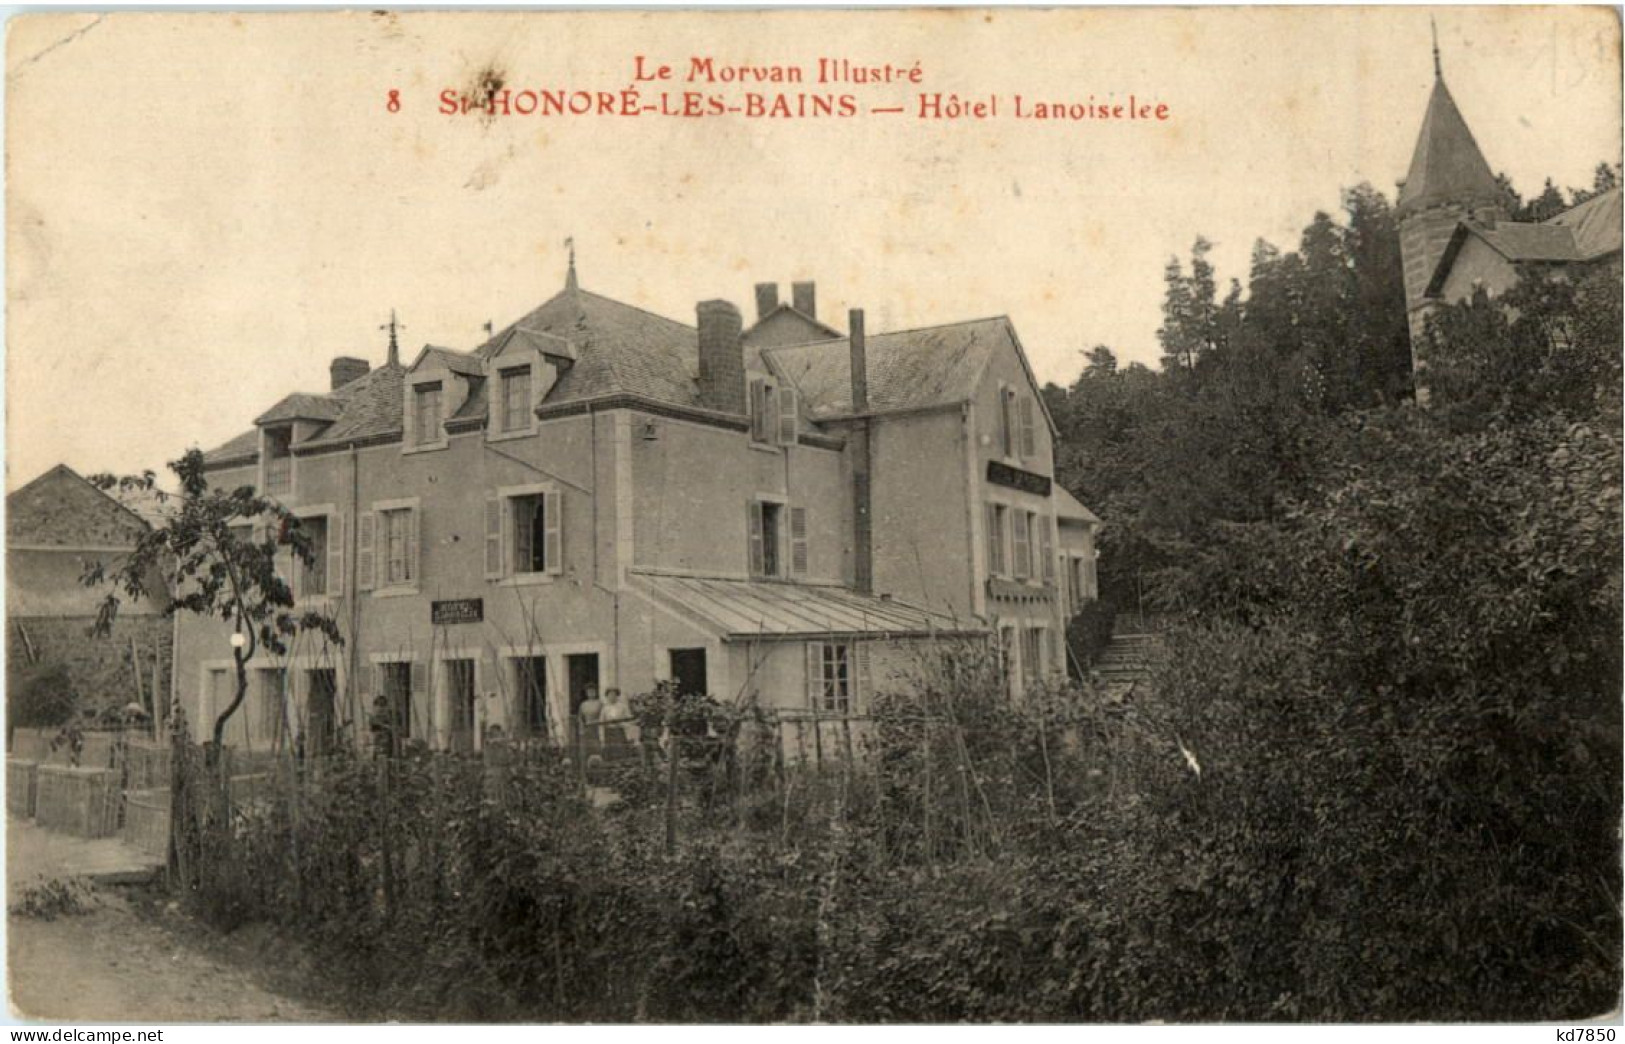 St. Honore Les Bains - Hotel Lanoiselee - Saint-Honoré-les-Bains